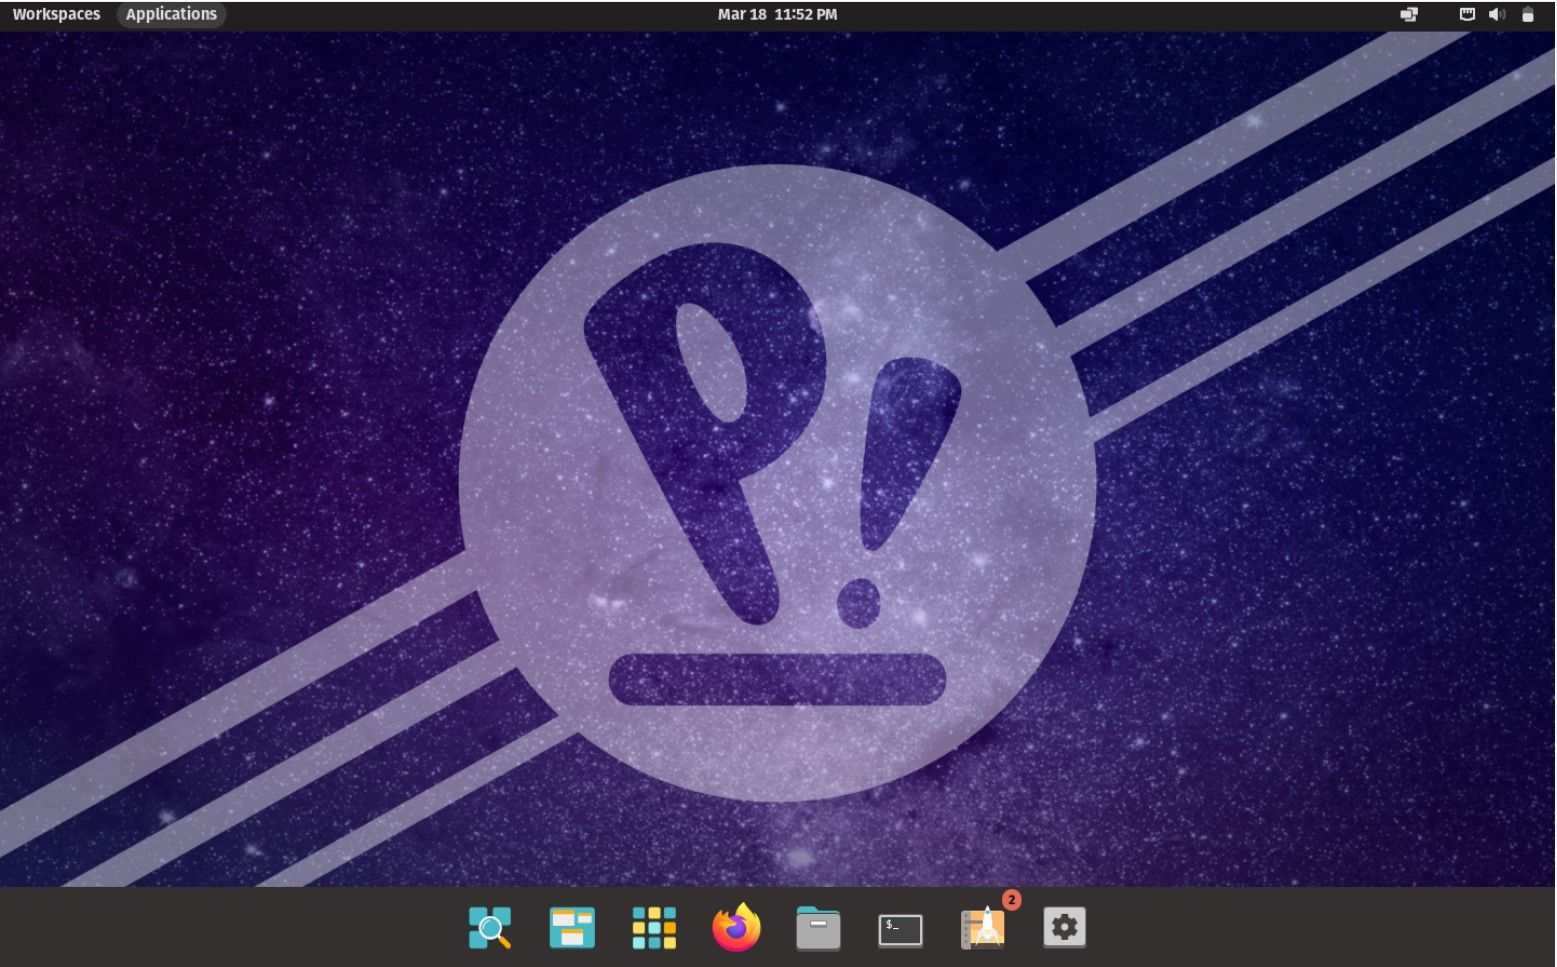 Pop!_OS 22.04 desktop environment with a menu bar and application icons